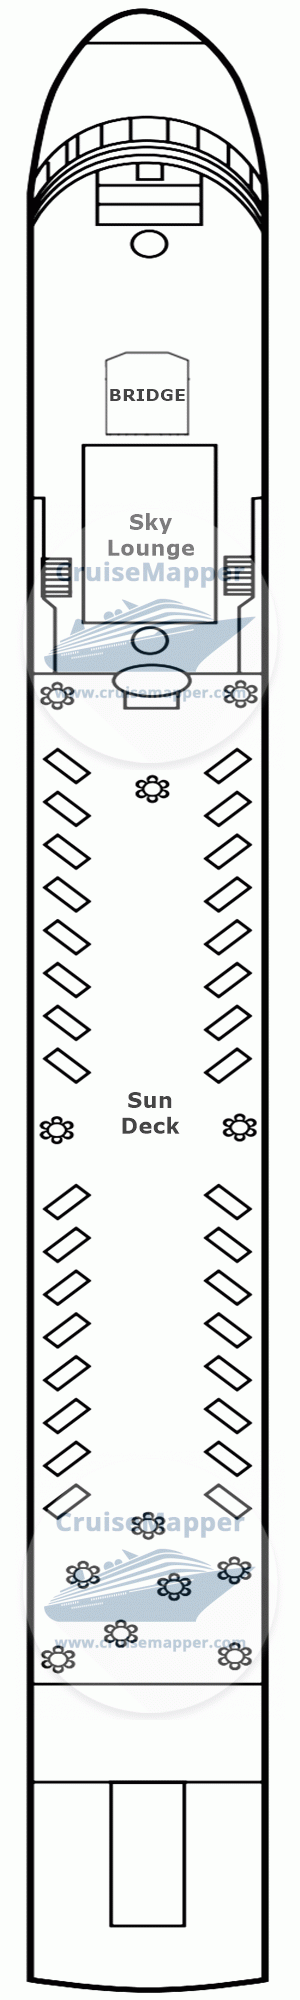 MS VistaExplorer Deck 04 - Sun